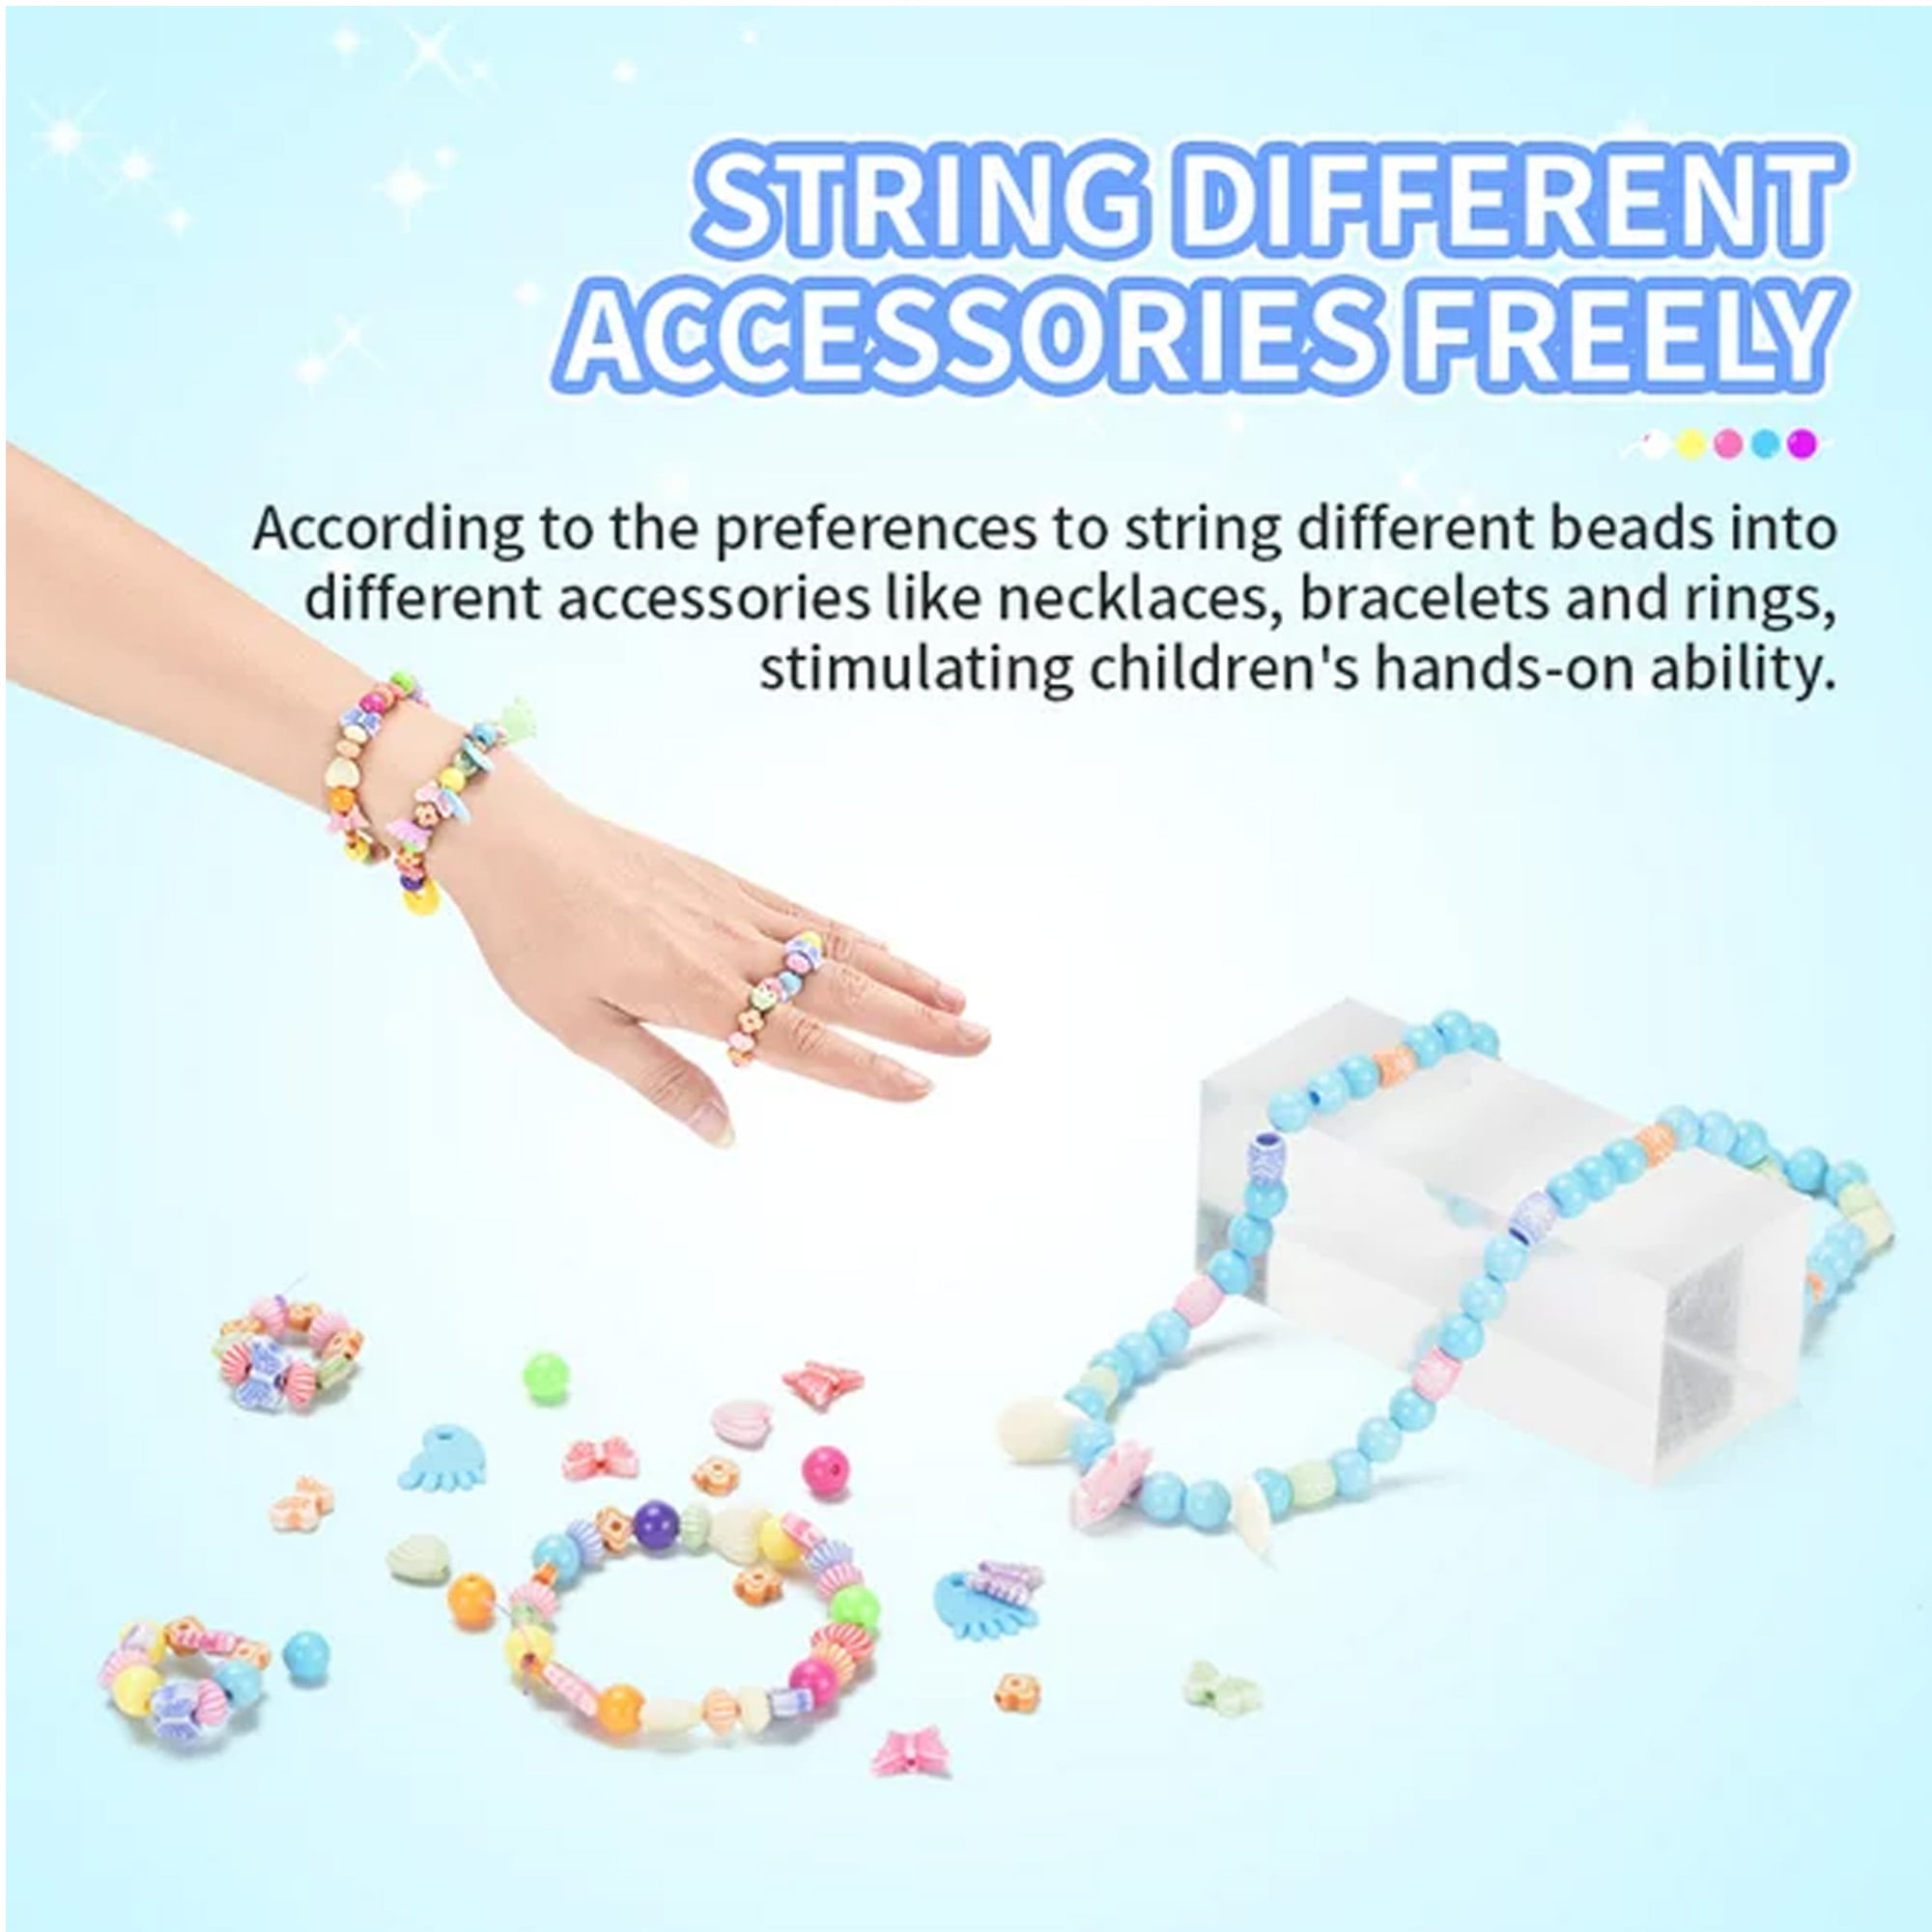 SpiceBox Children's Activity Kits for Kids Best Friend Bracelets, 13  Bracelets Design To Try, DIY Friendship Bracelet Making Kit For Girls 